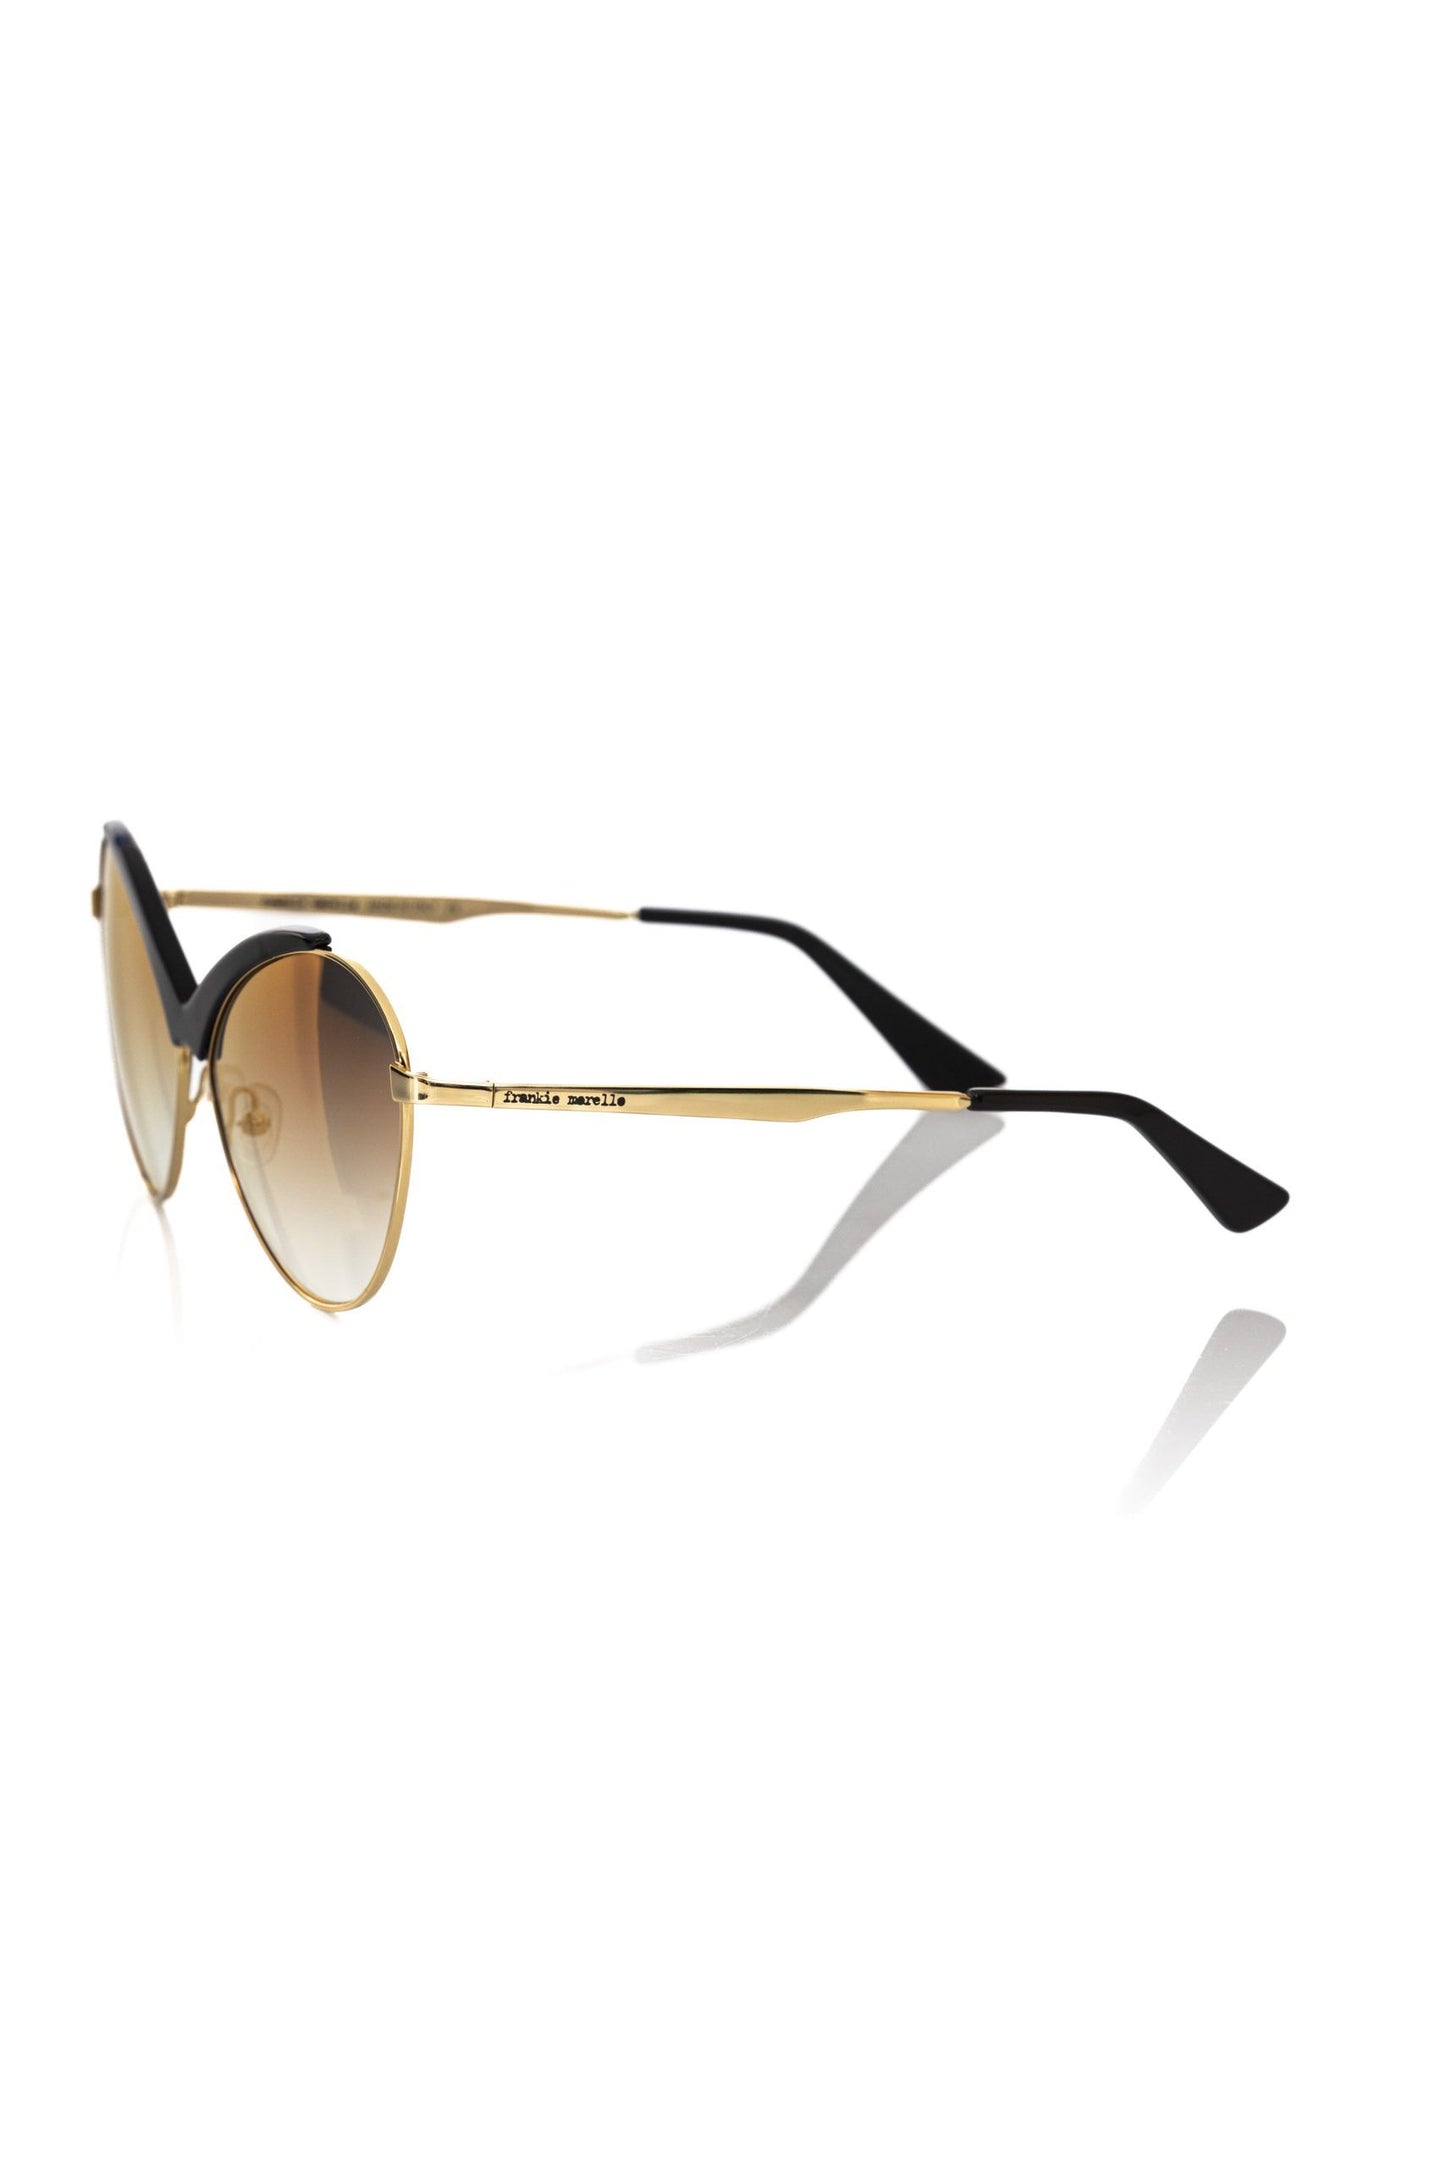 Frankie Morello FRMO-22083 Black Metallic Fibre Sunglasses